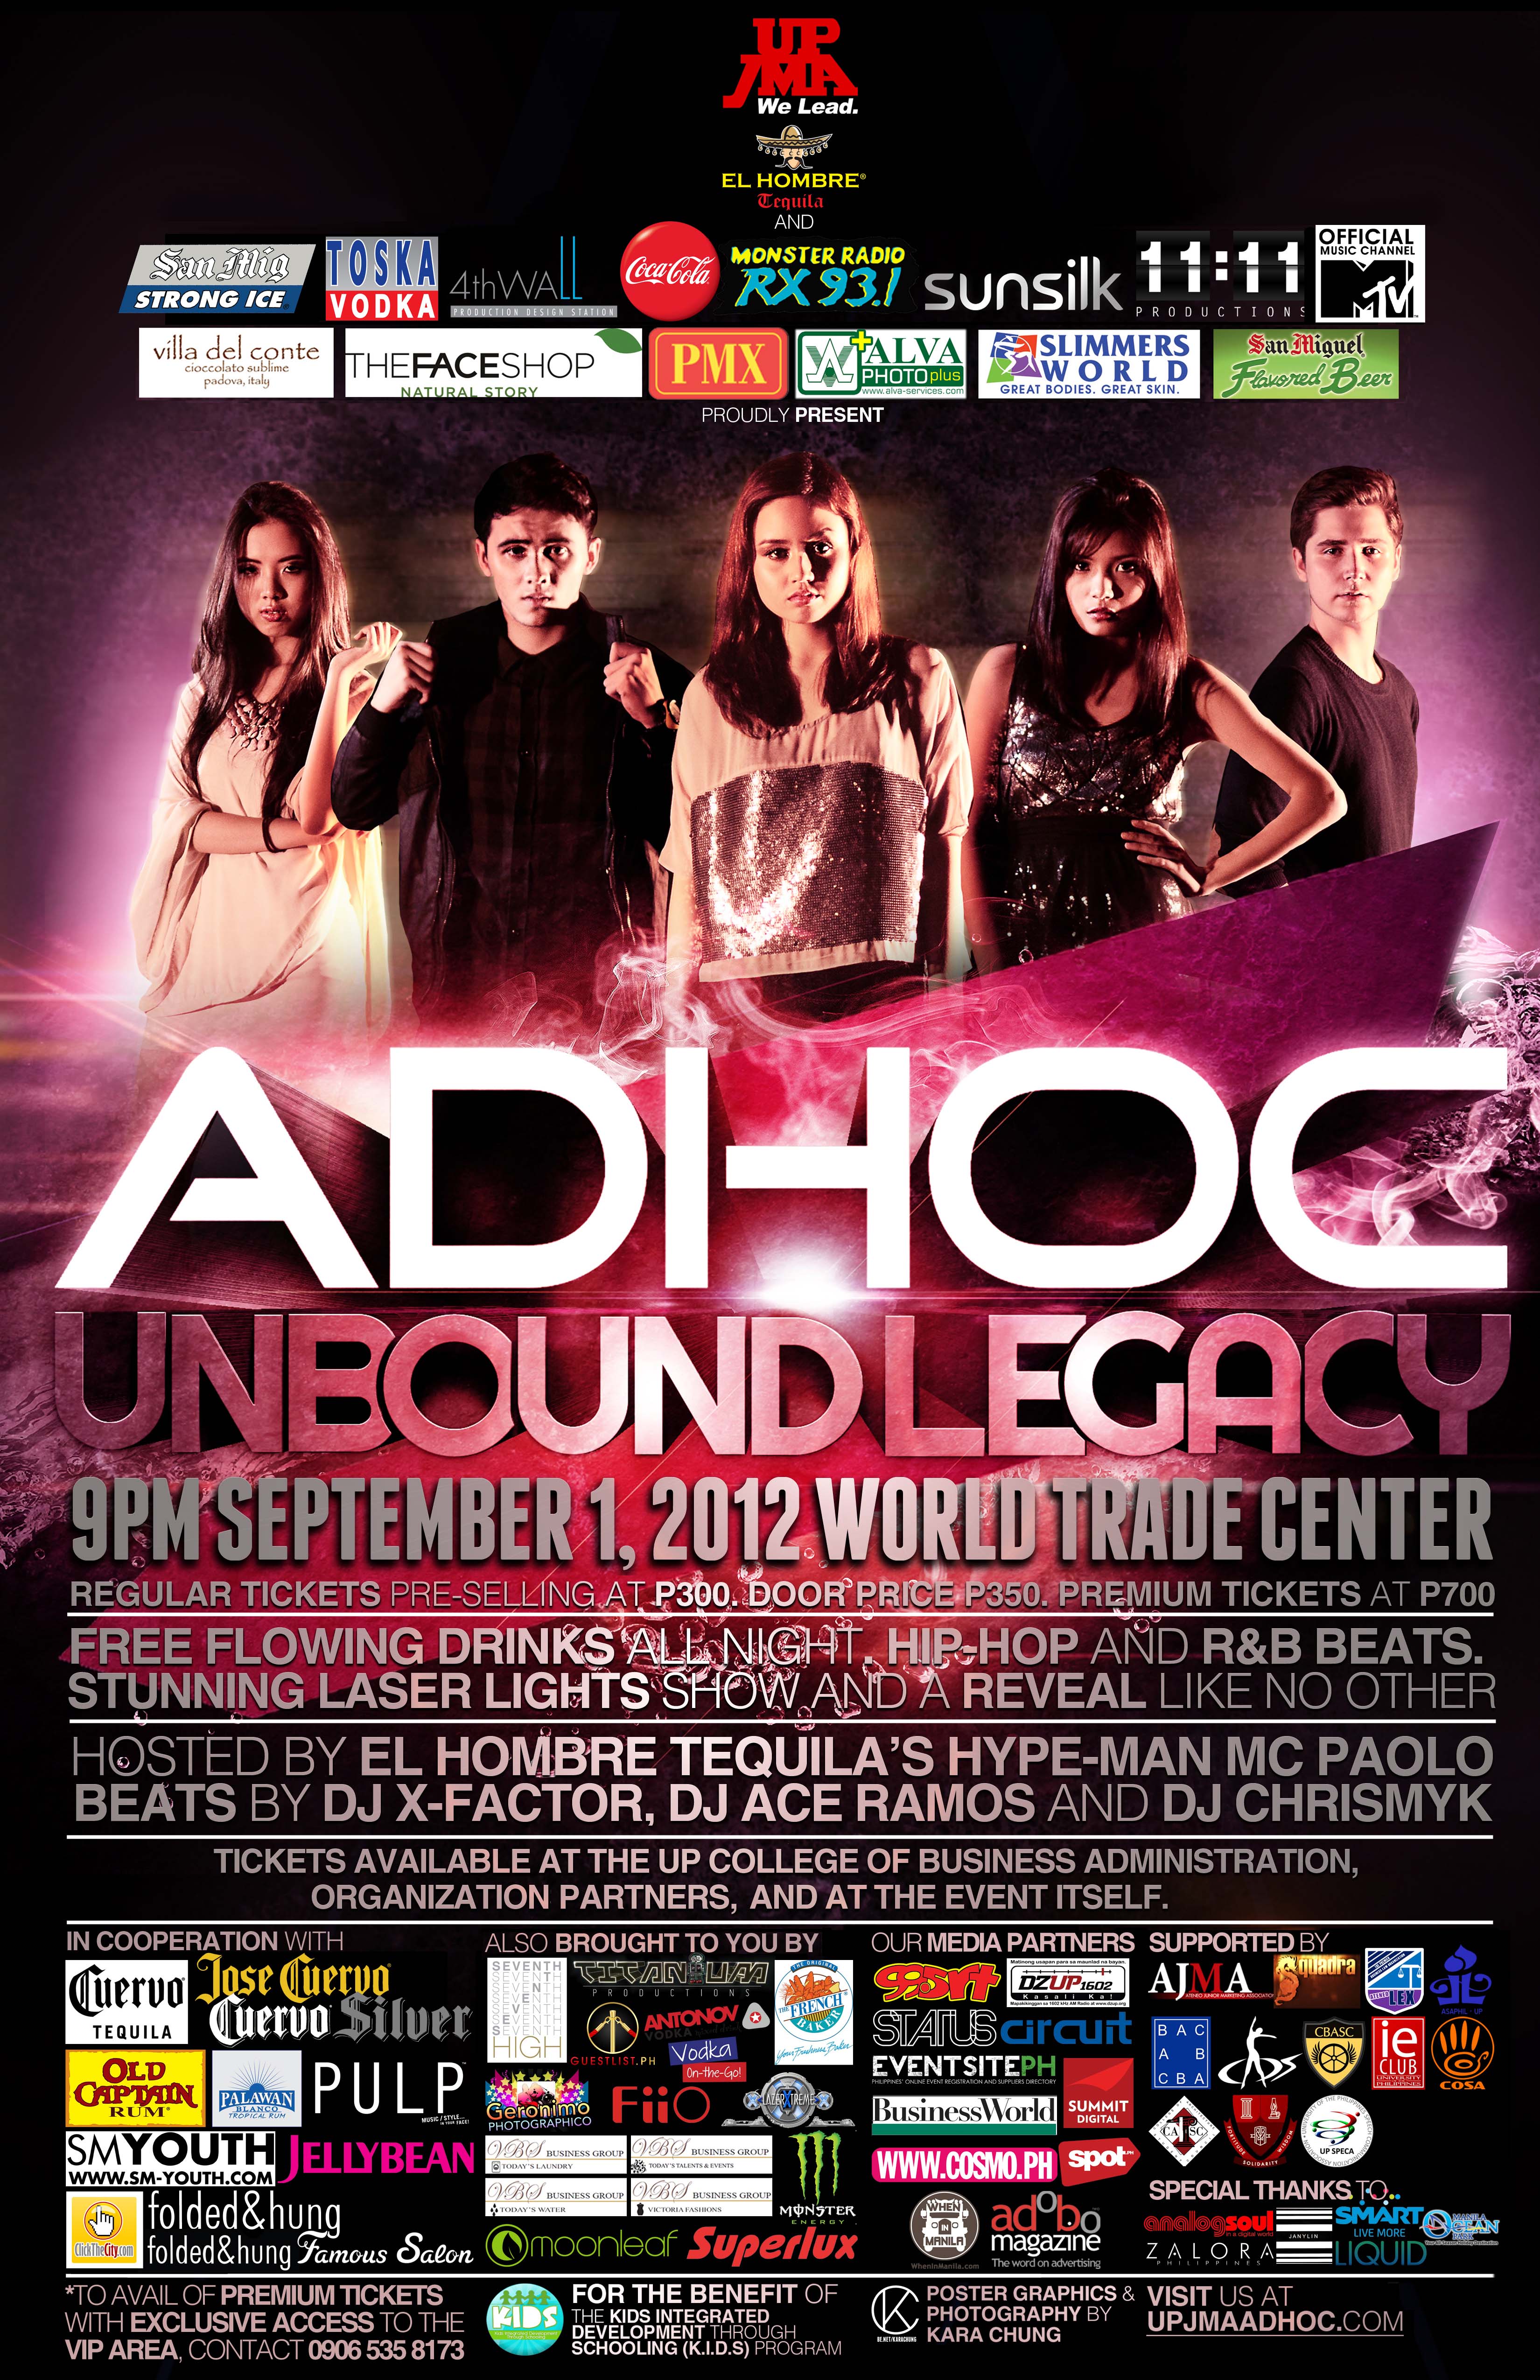 ADHOC Unbound Legacy